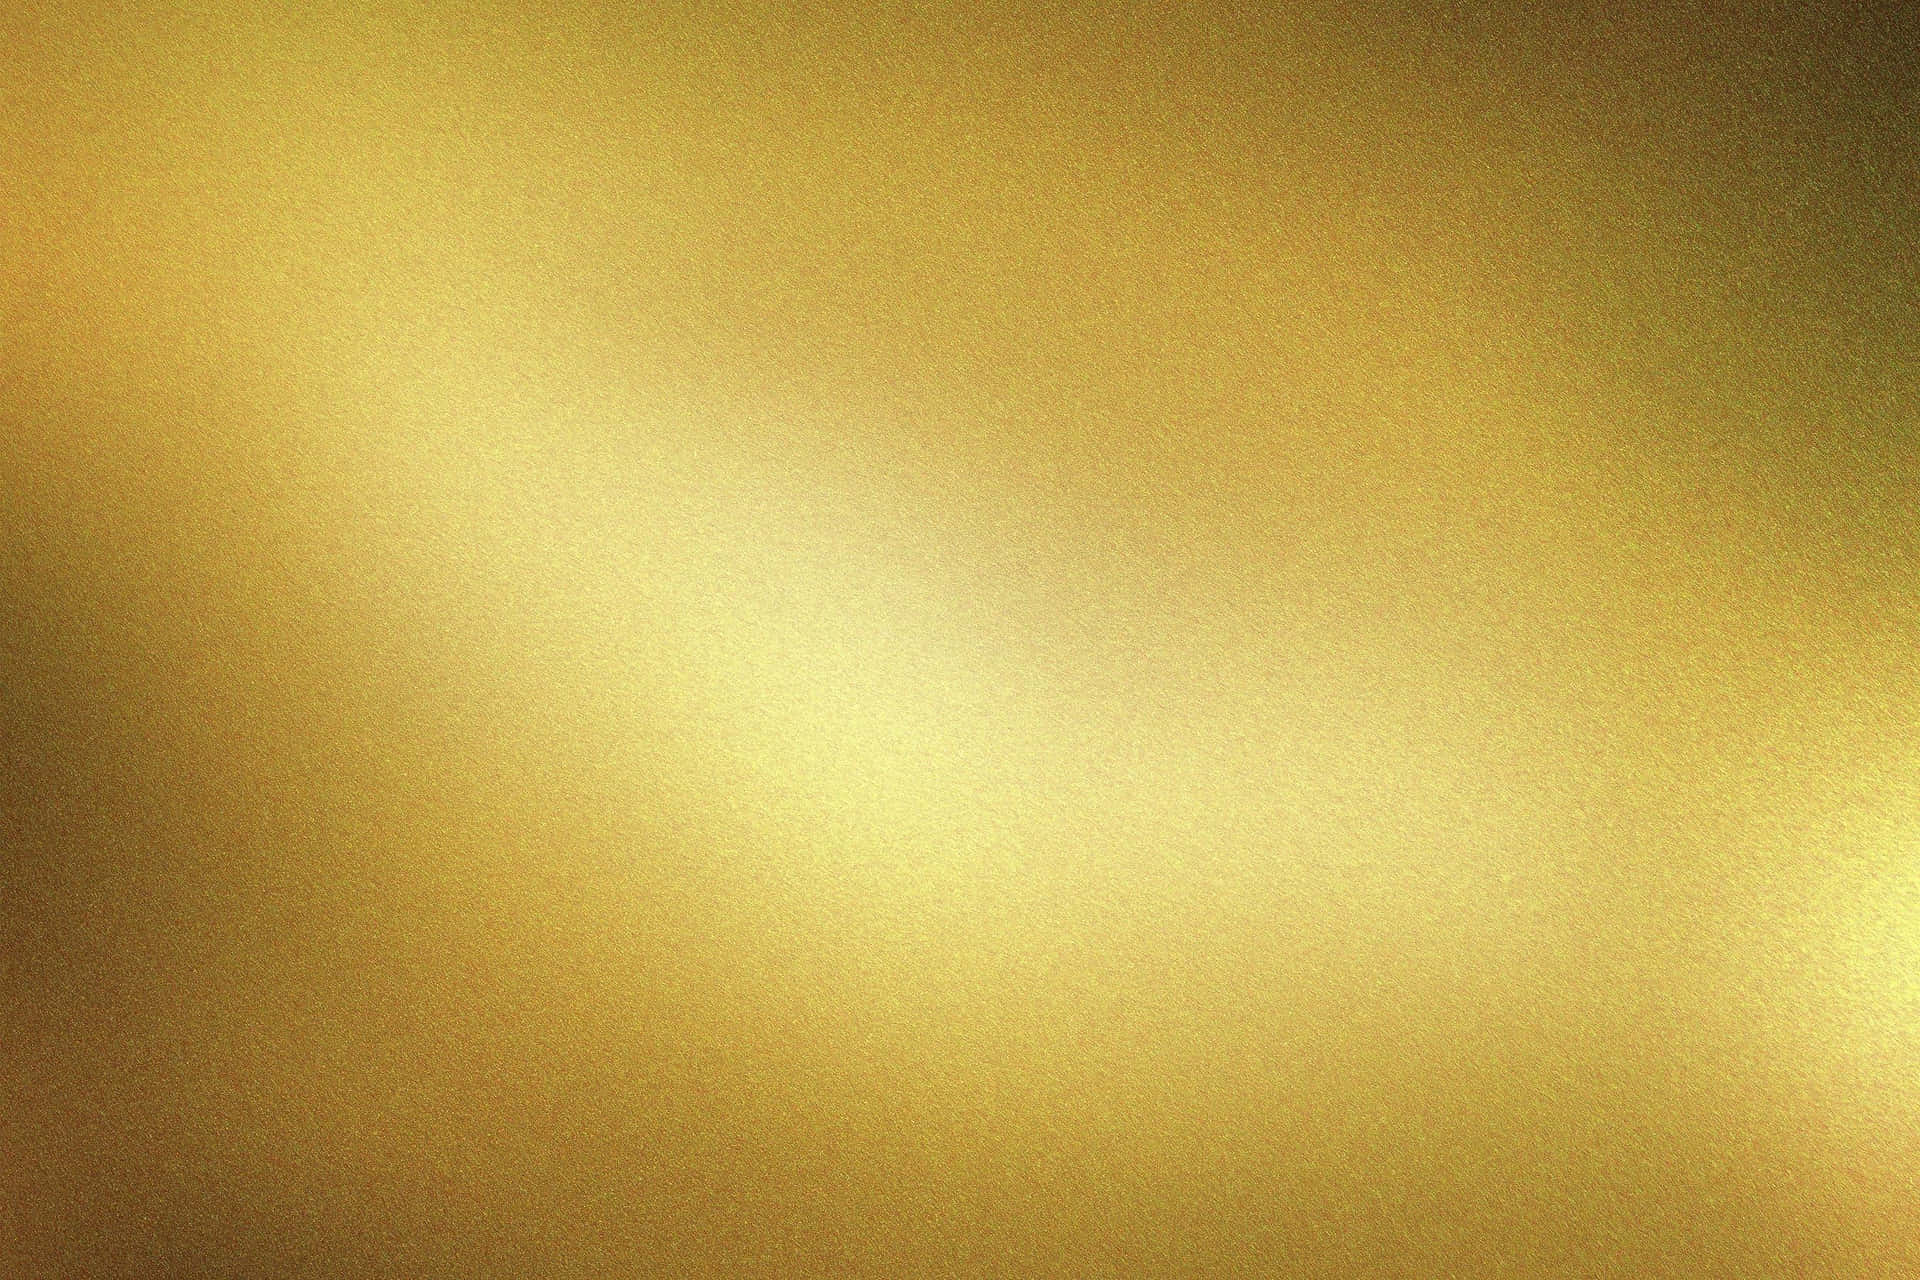 Fundode Textura Dourada